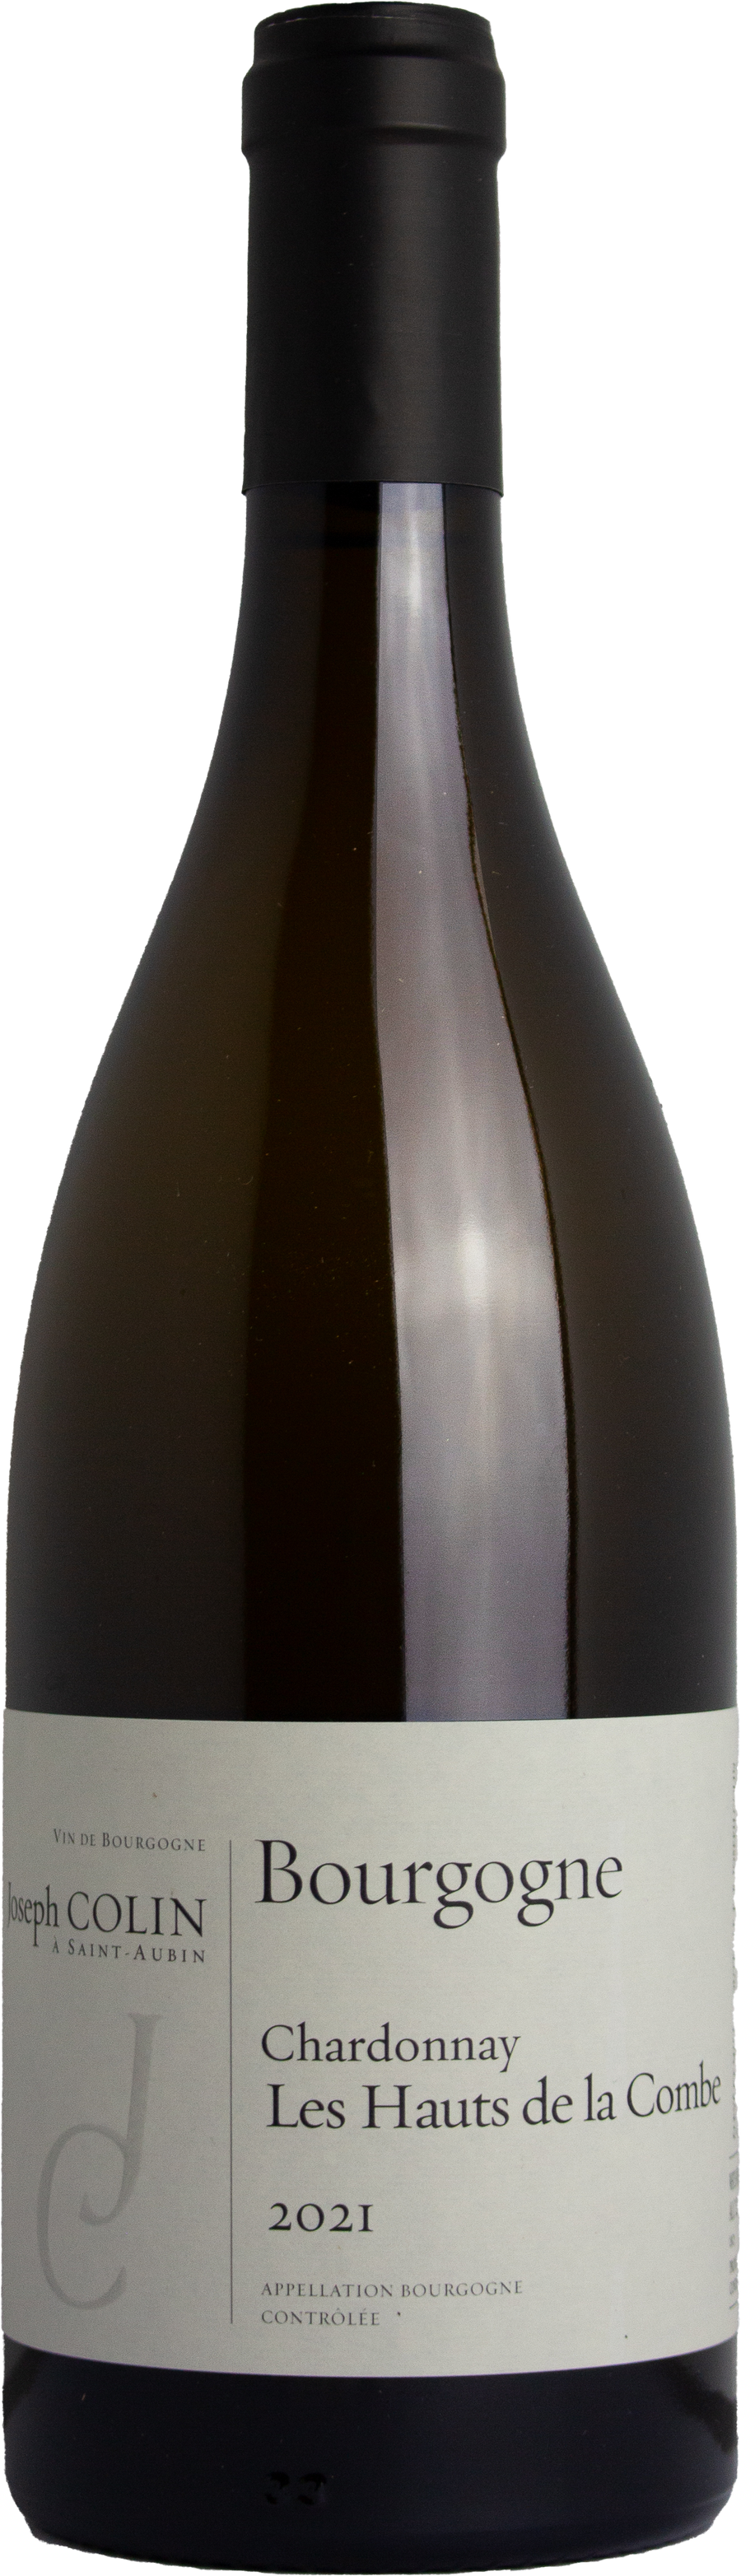 Domaine Joseph Colin - Bourgogne Chardonnay 